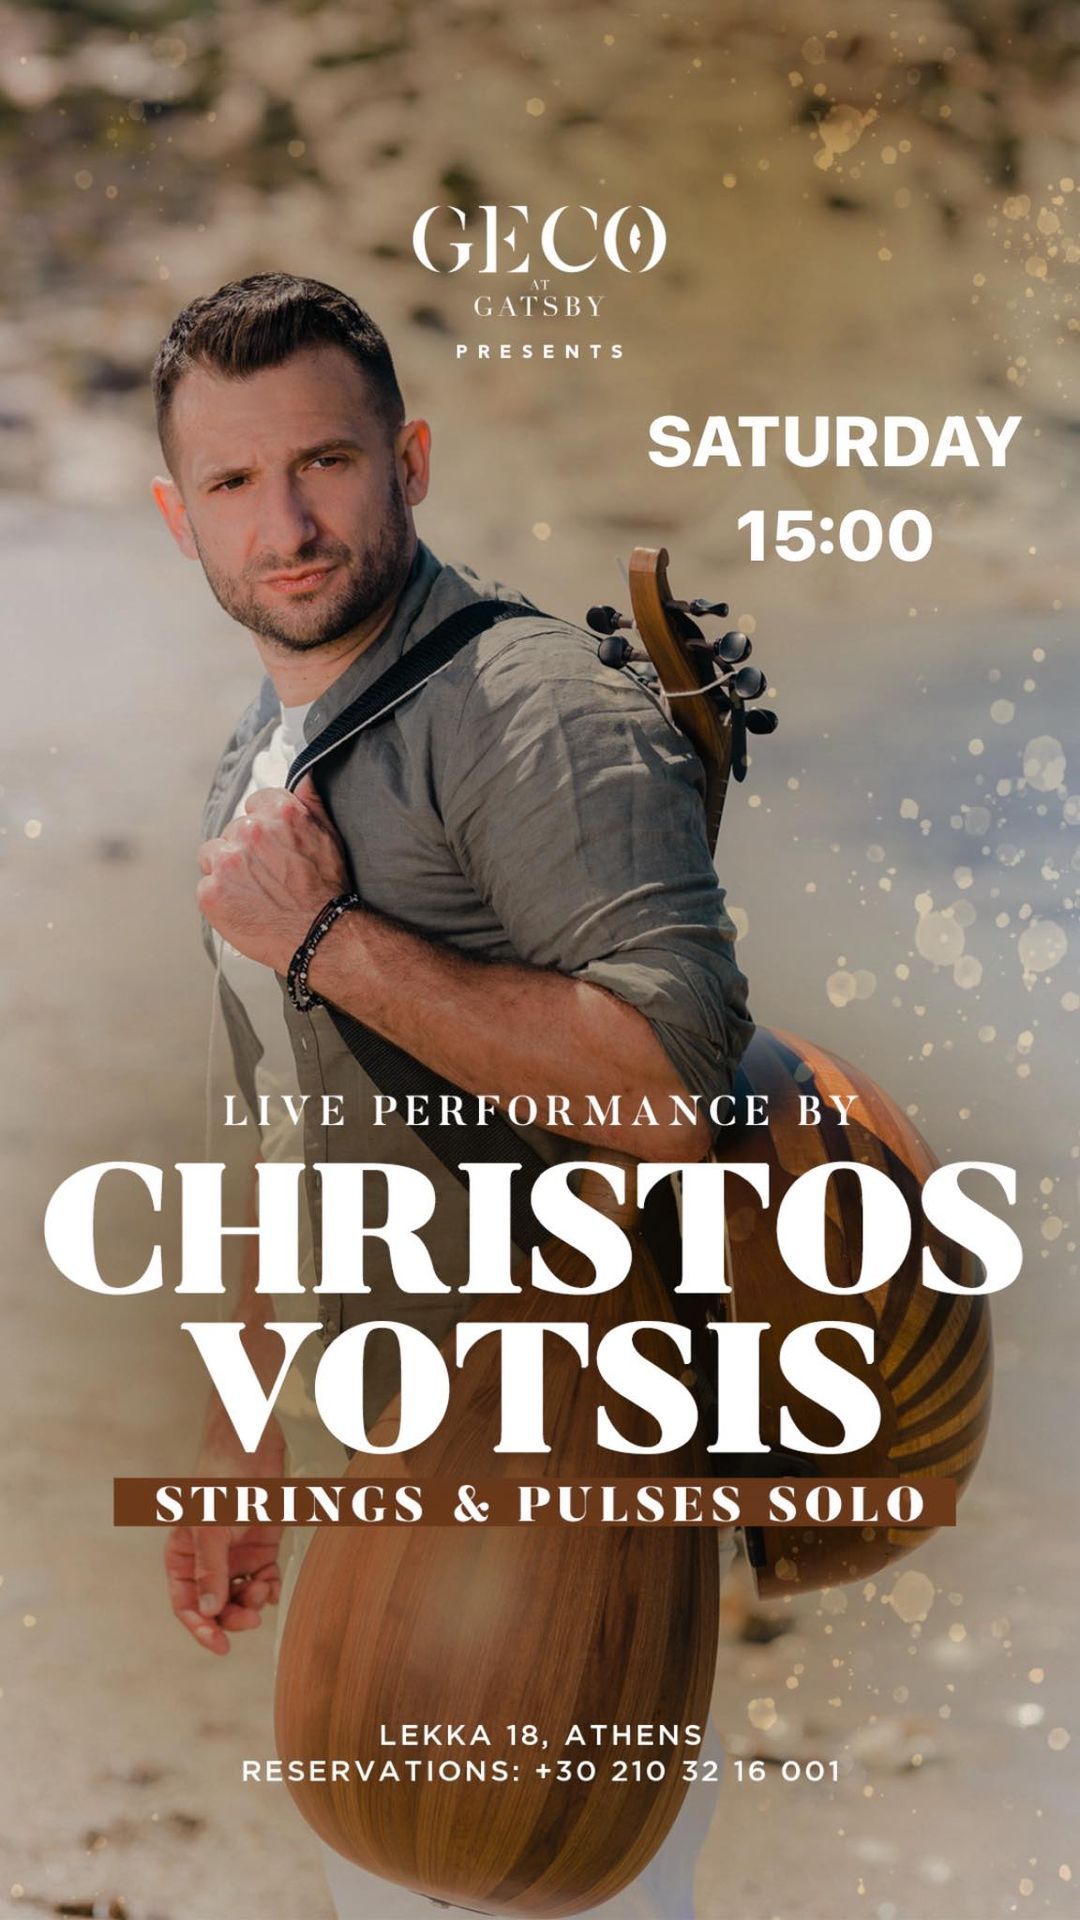 Live performance by Christos Votsis